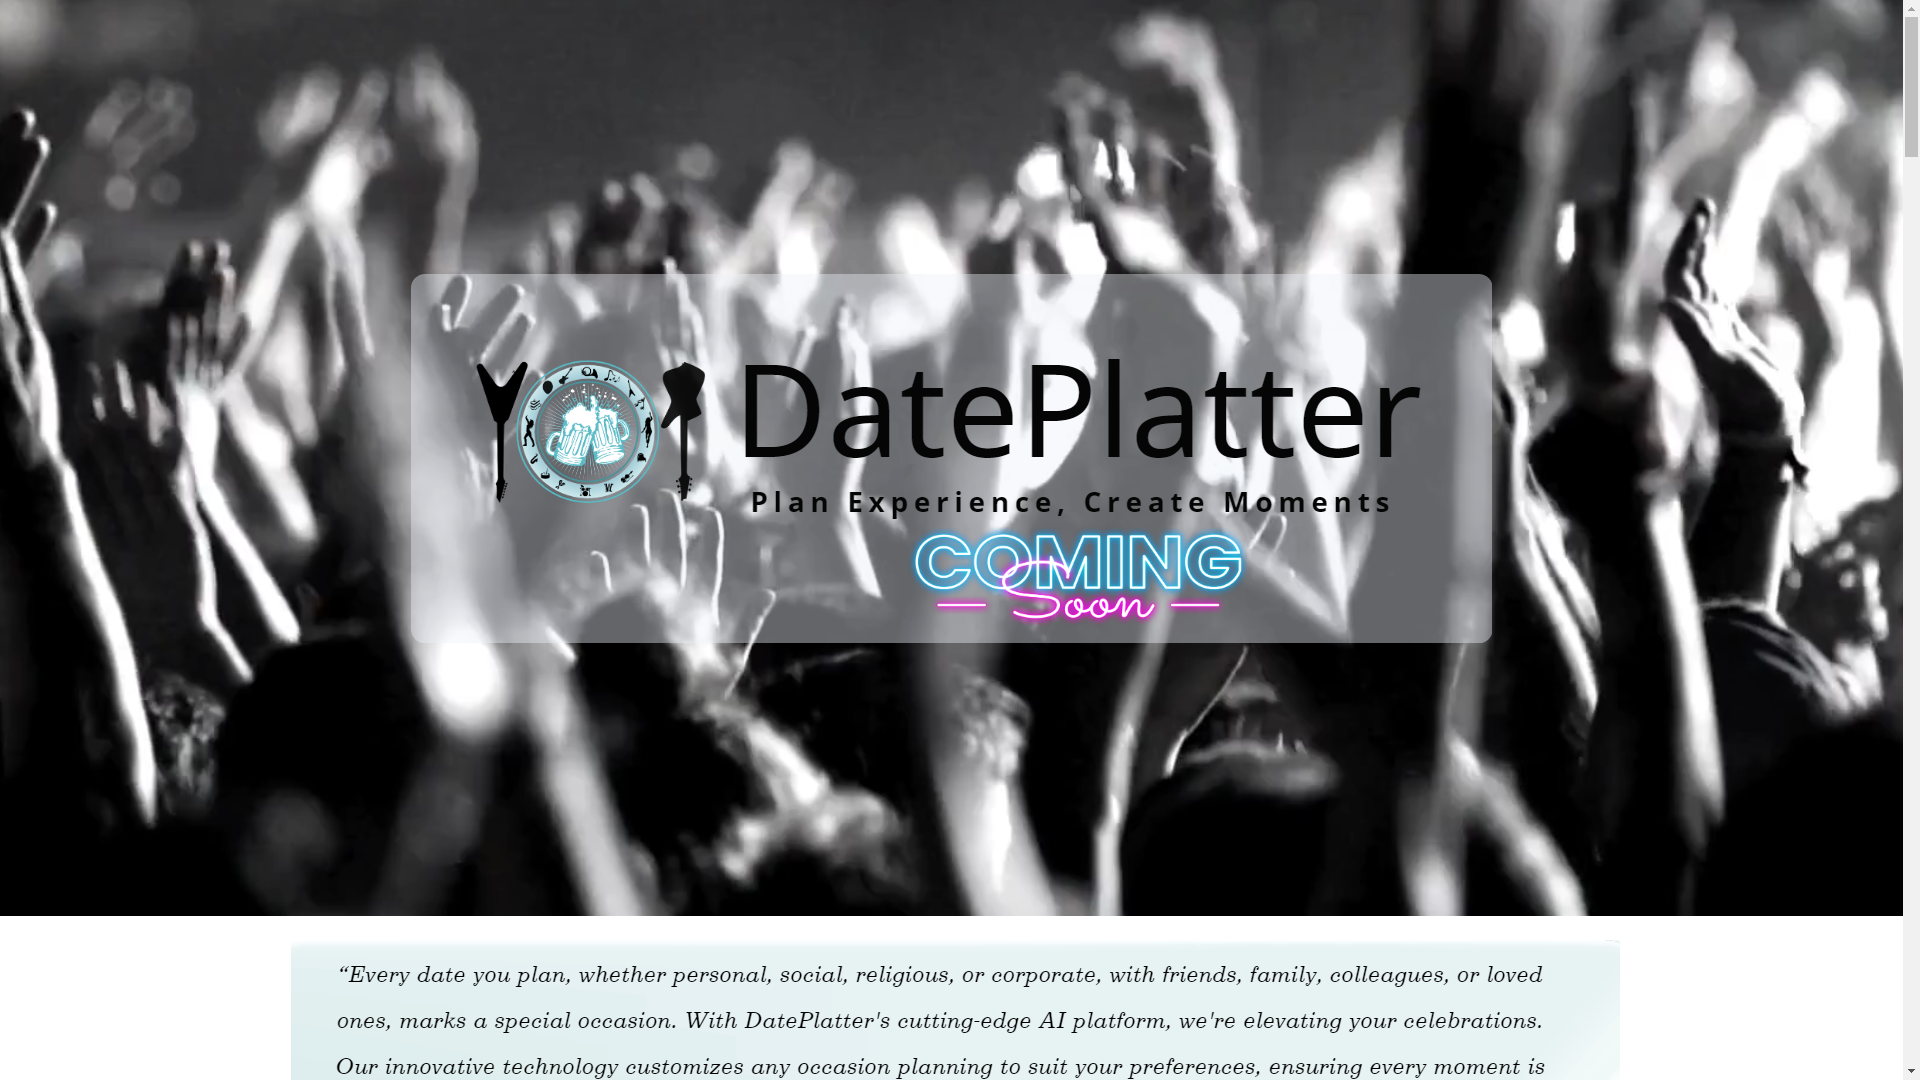 DatePlatter